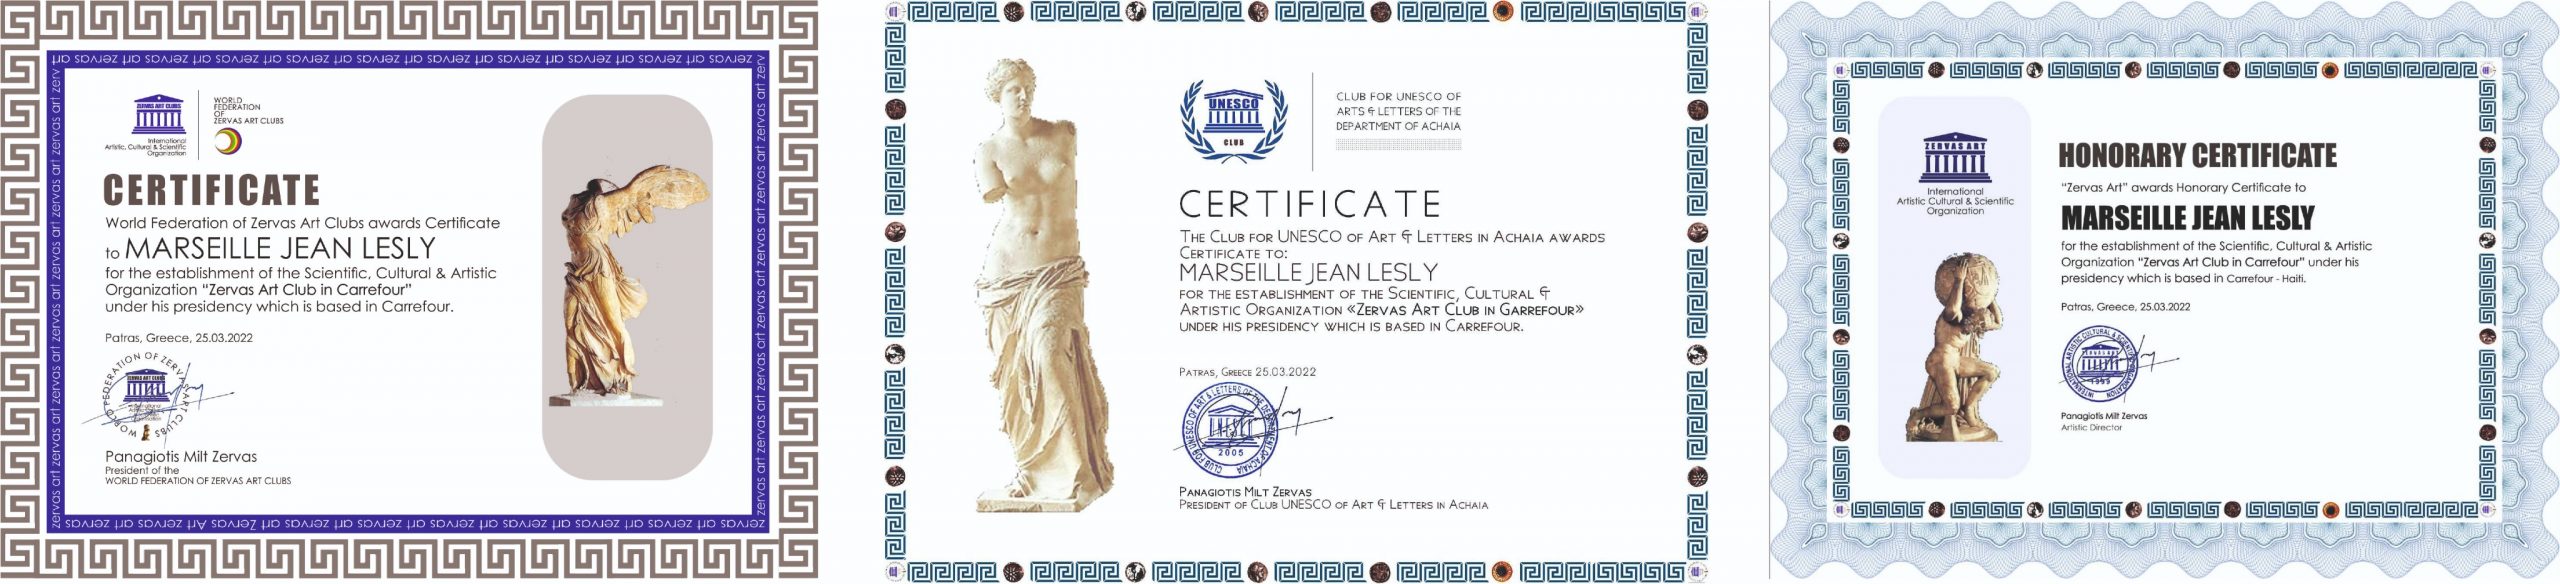 Marseille Jean Lesly